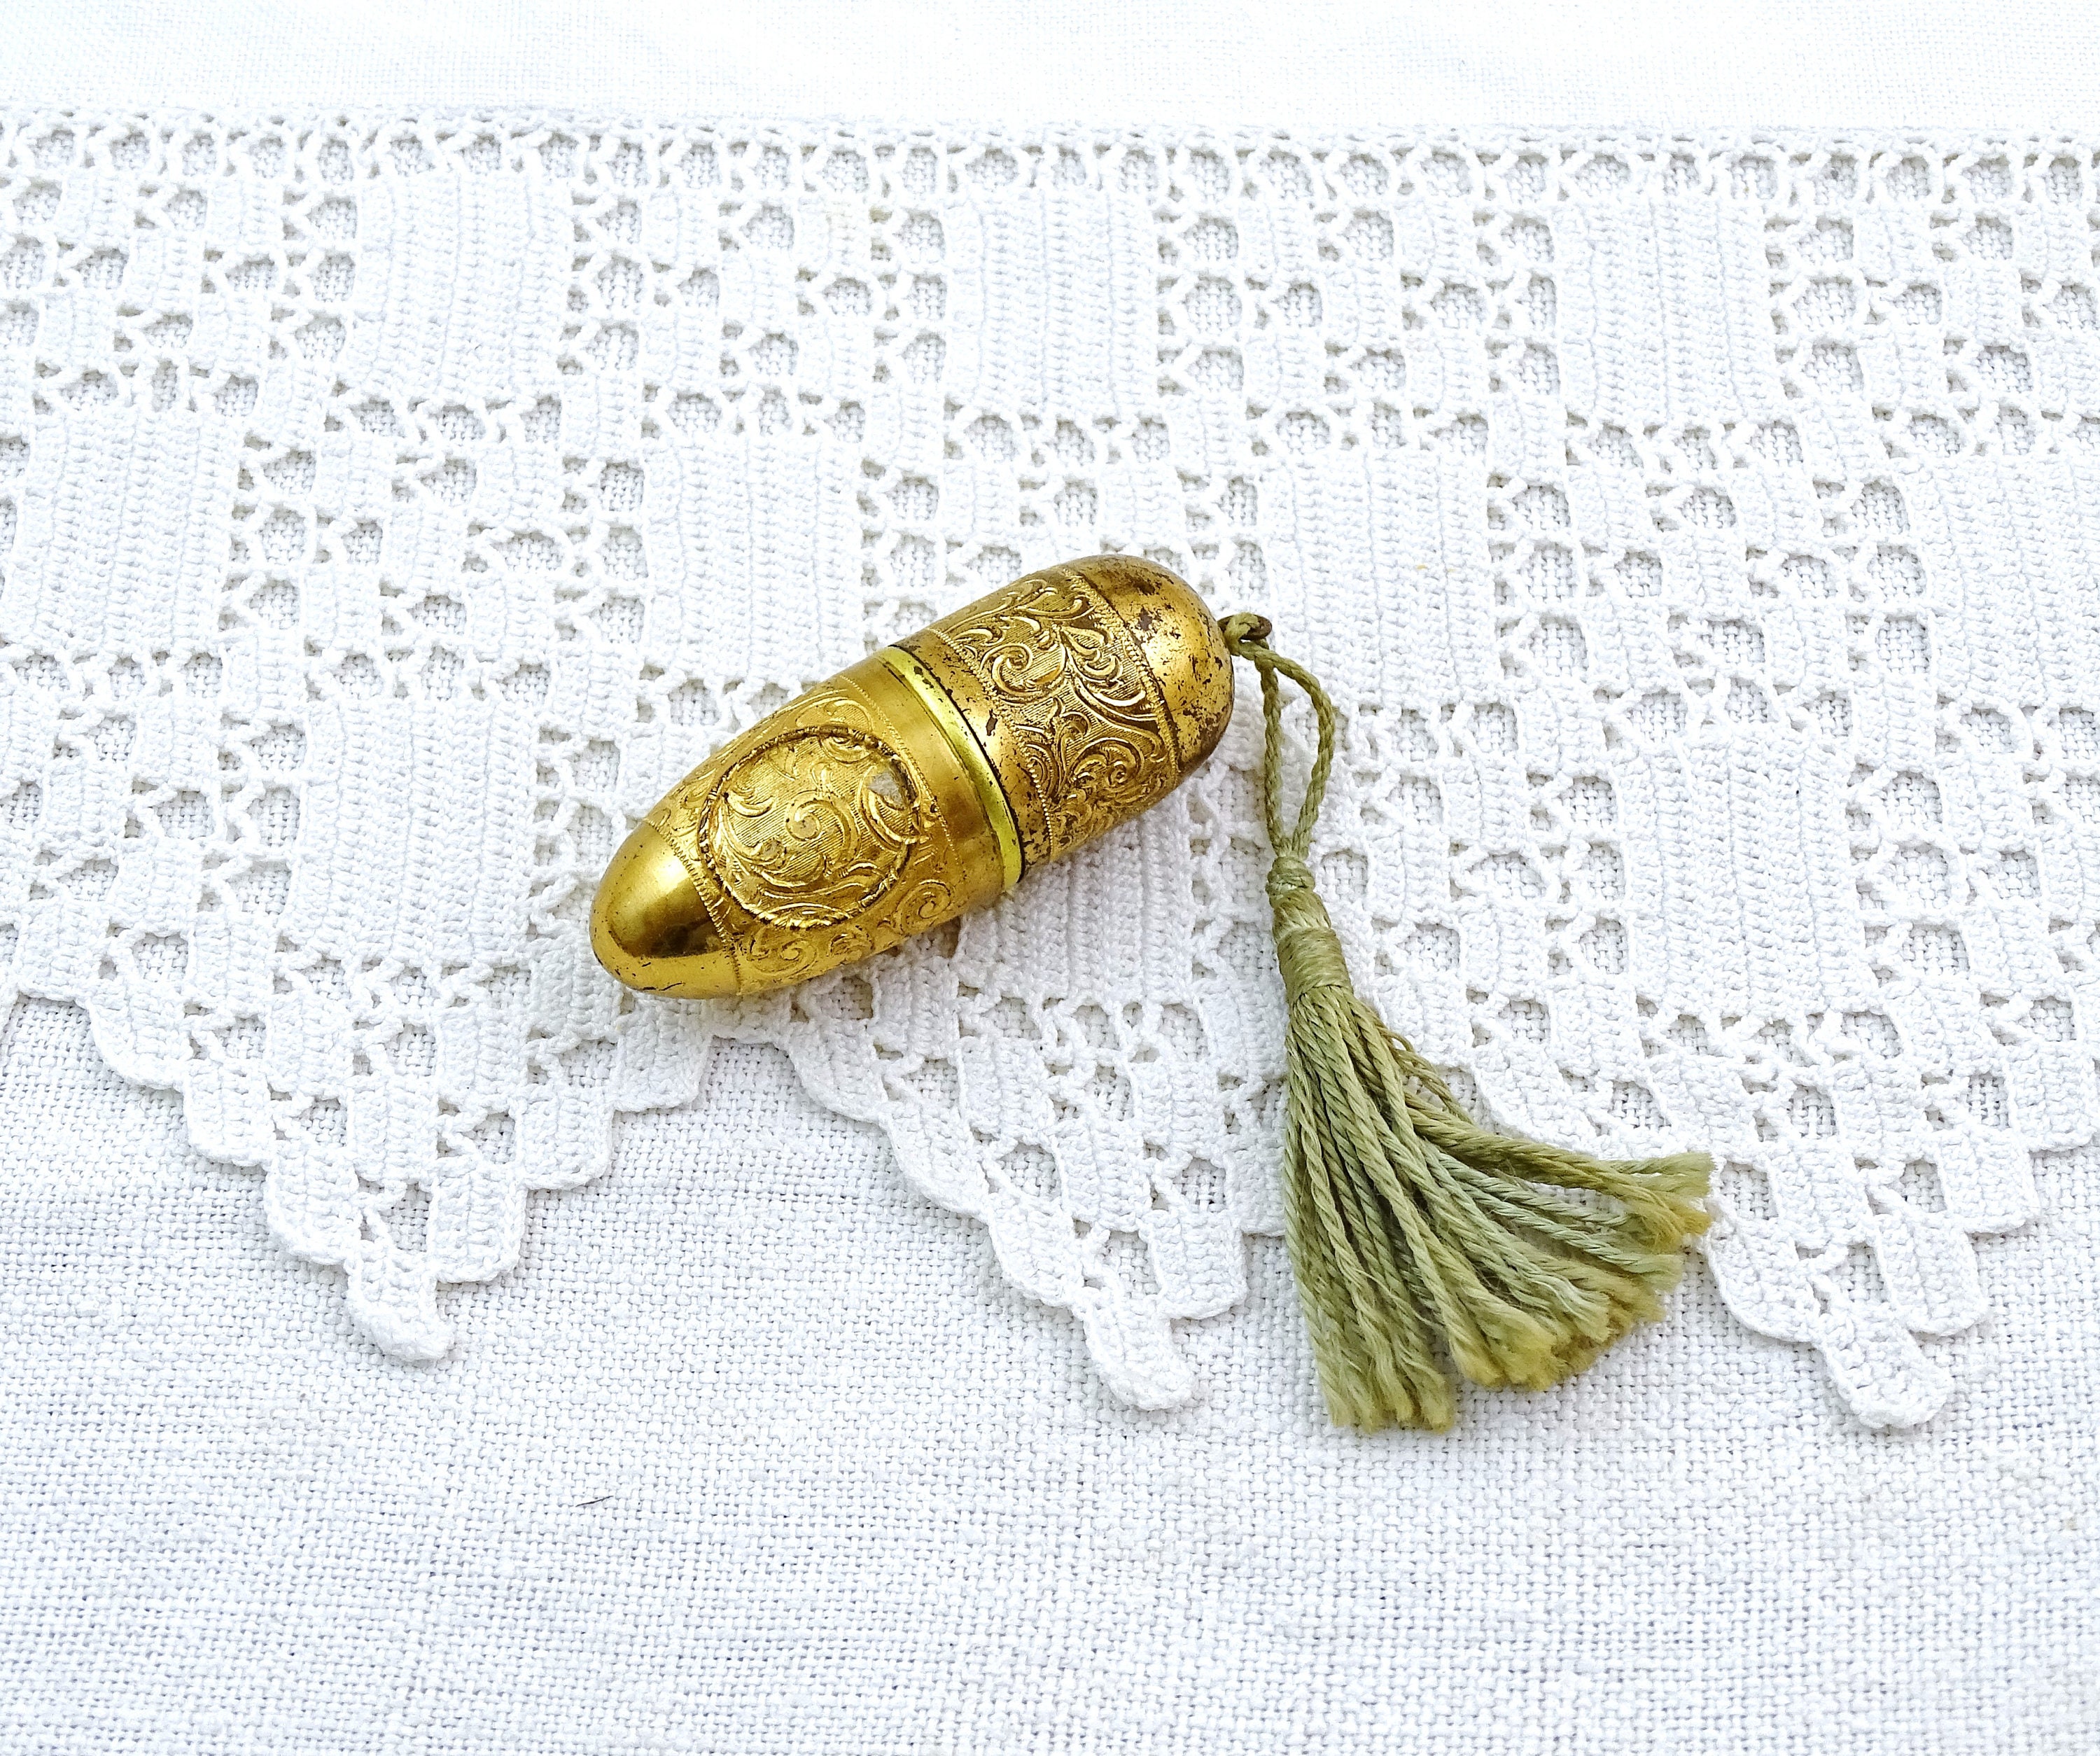 Vintage Small Sewing Kit Travel Size Gold Tone Pattern Shiny Kiss Closure